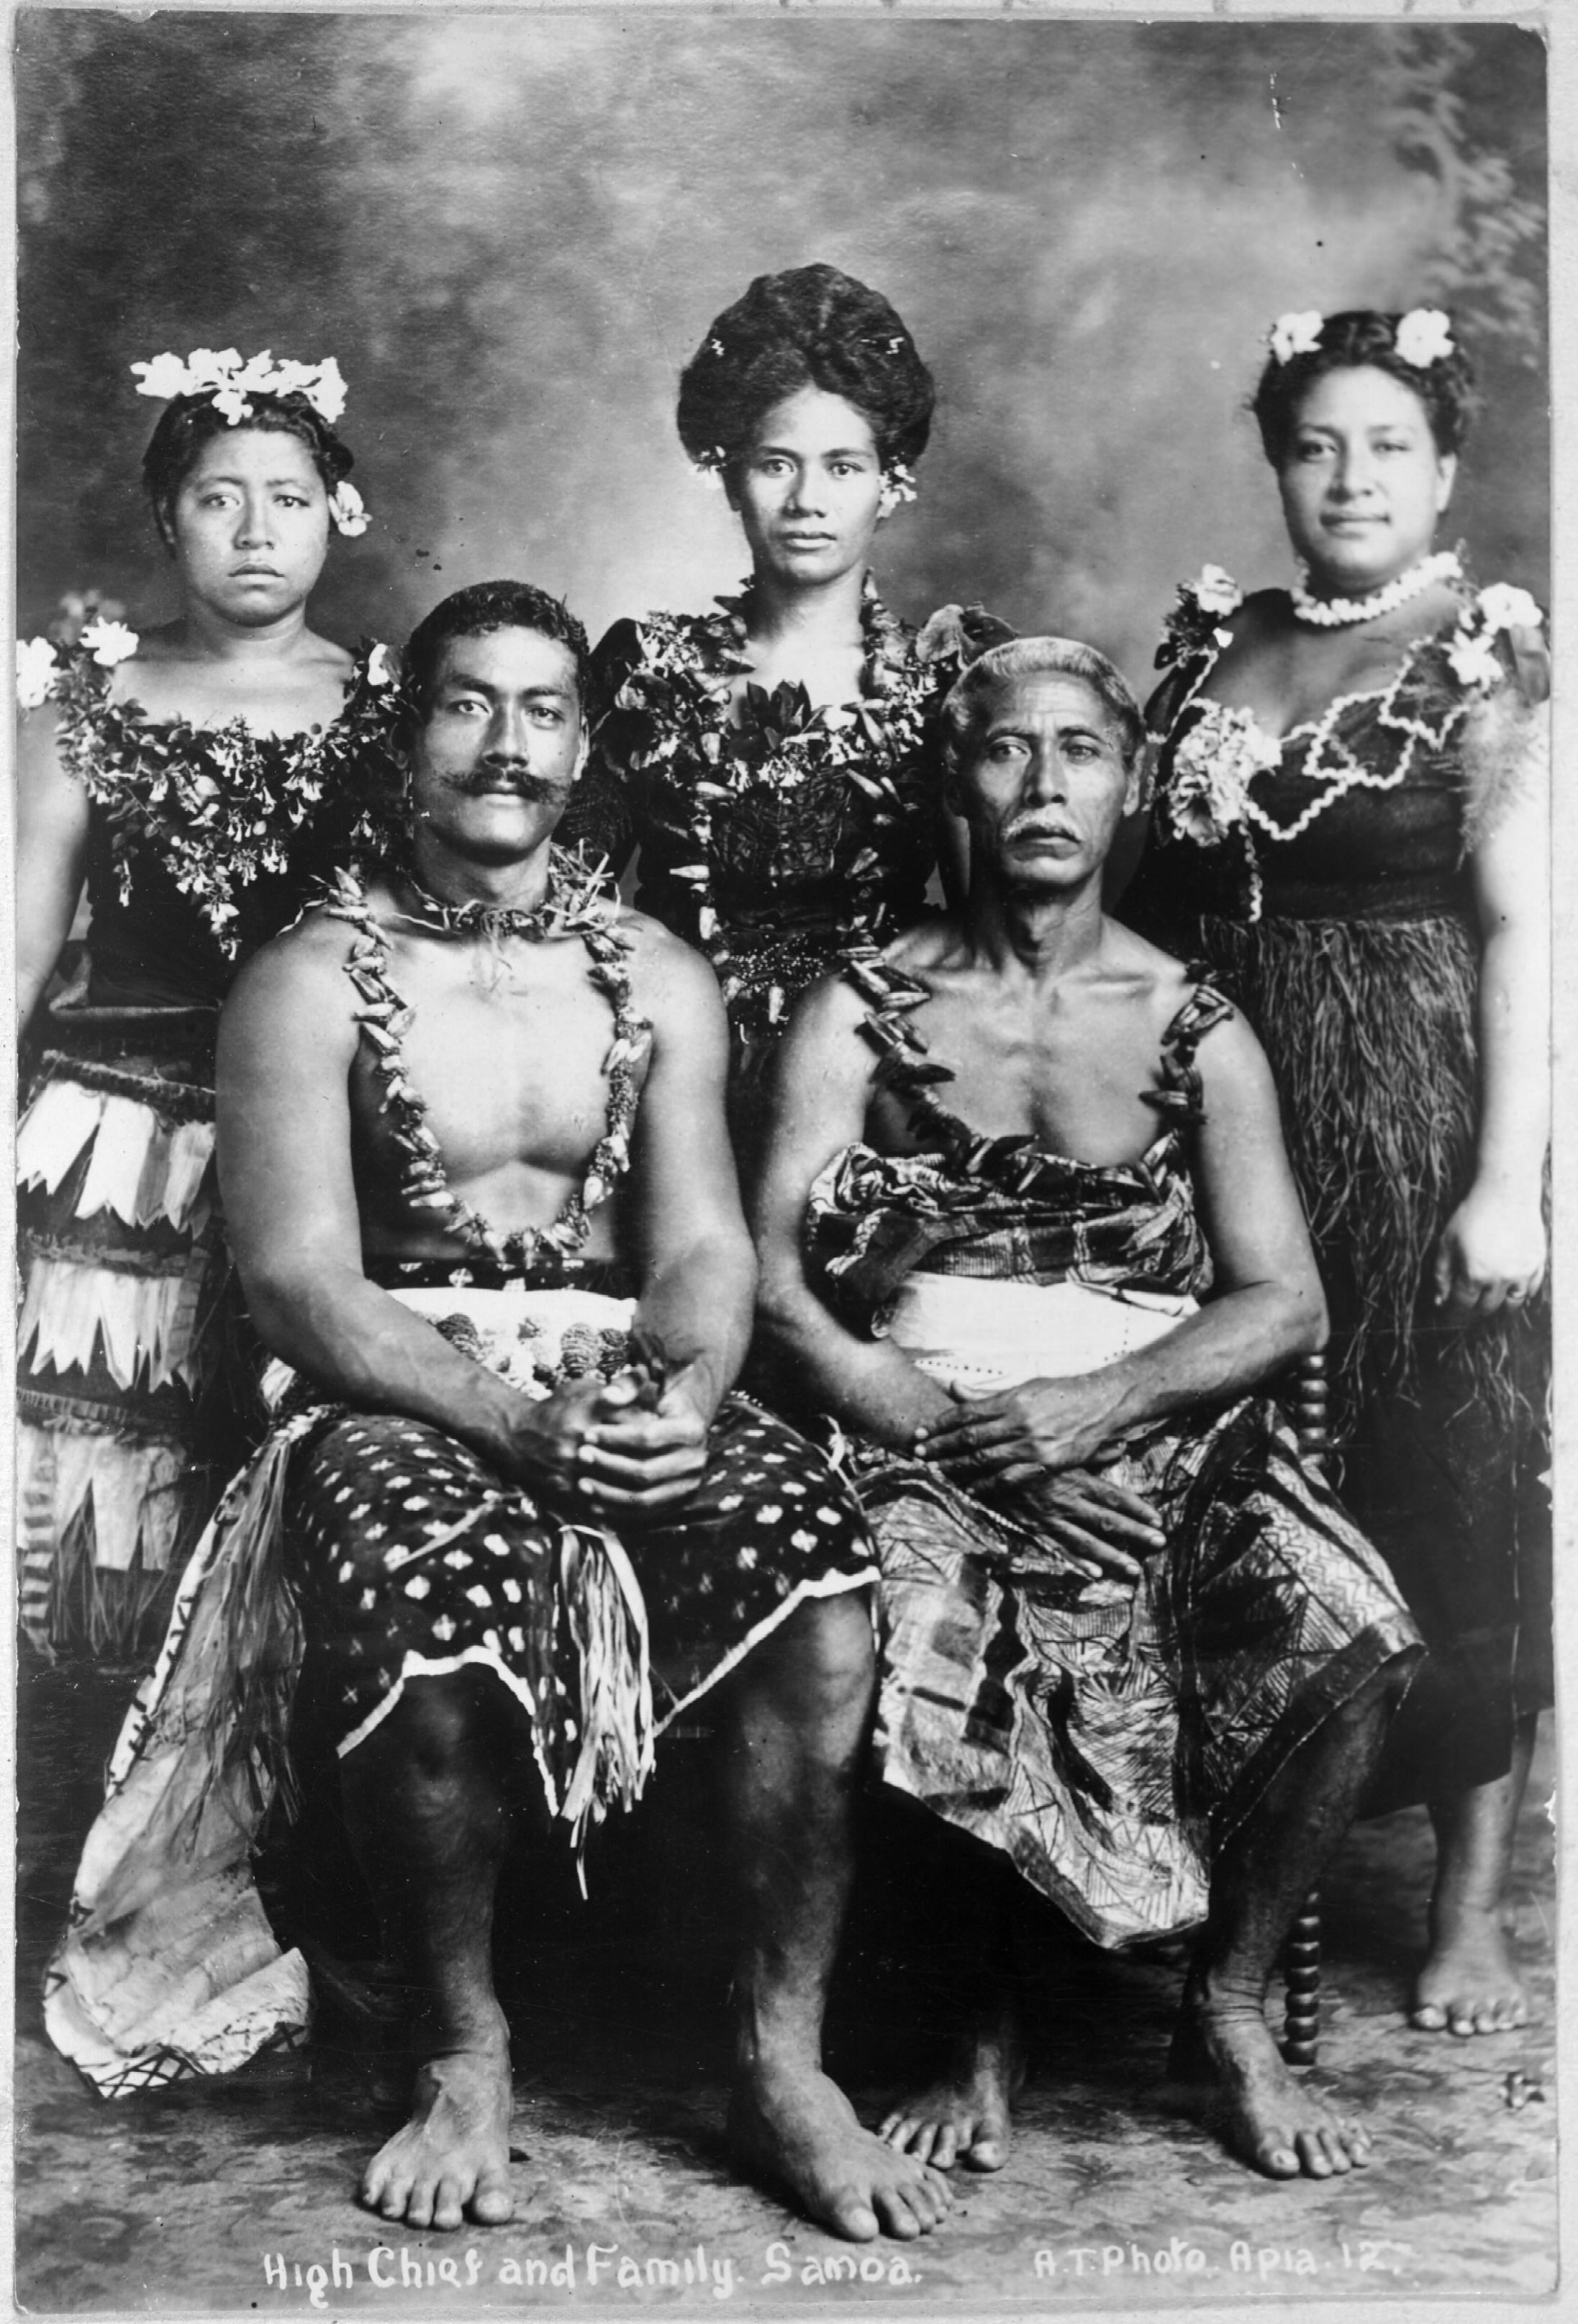 High Chief and family, Samoa, ca 1914